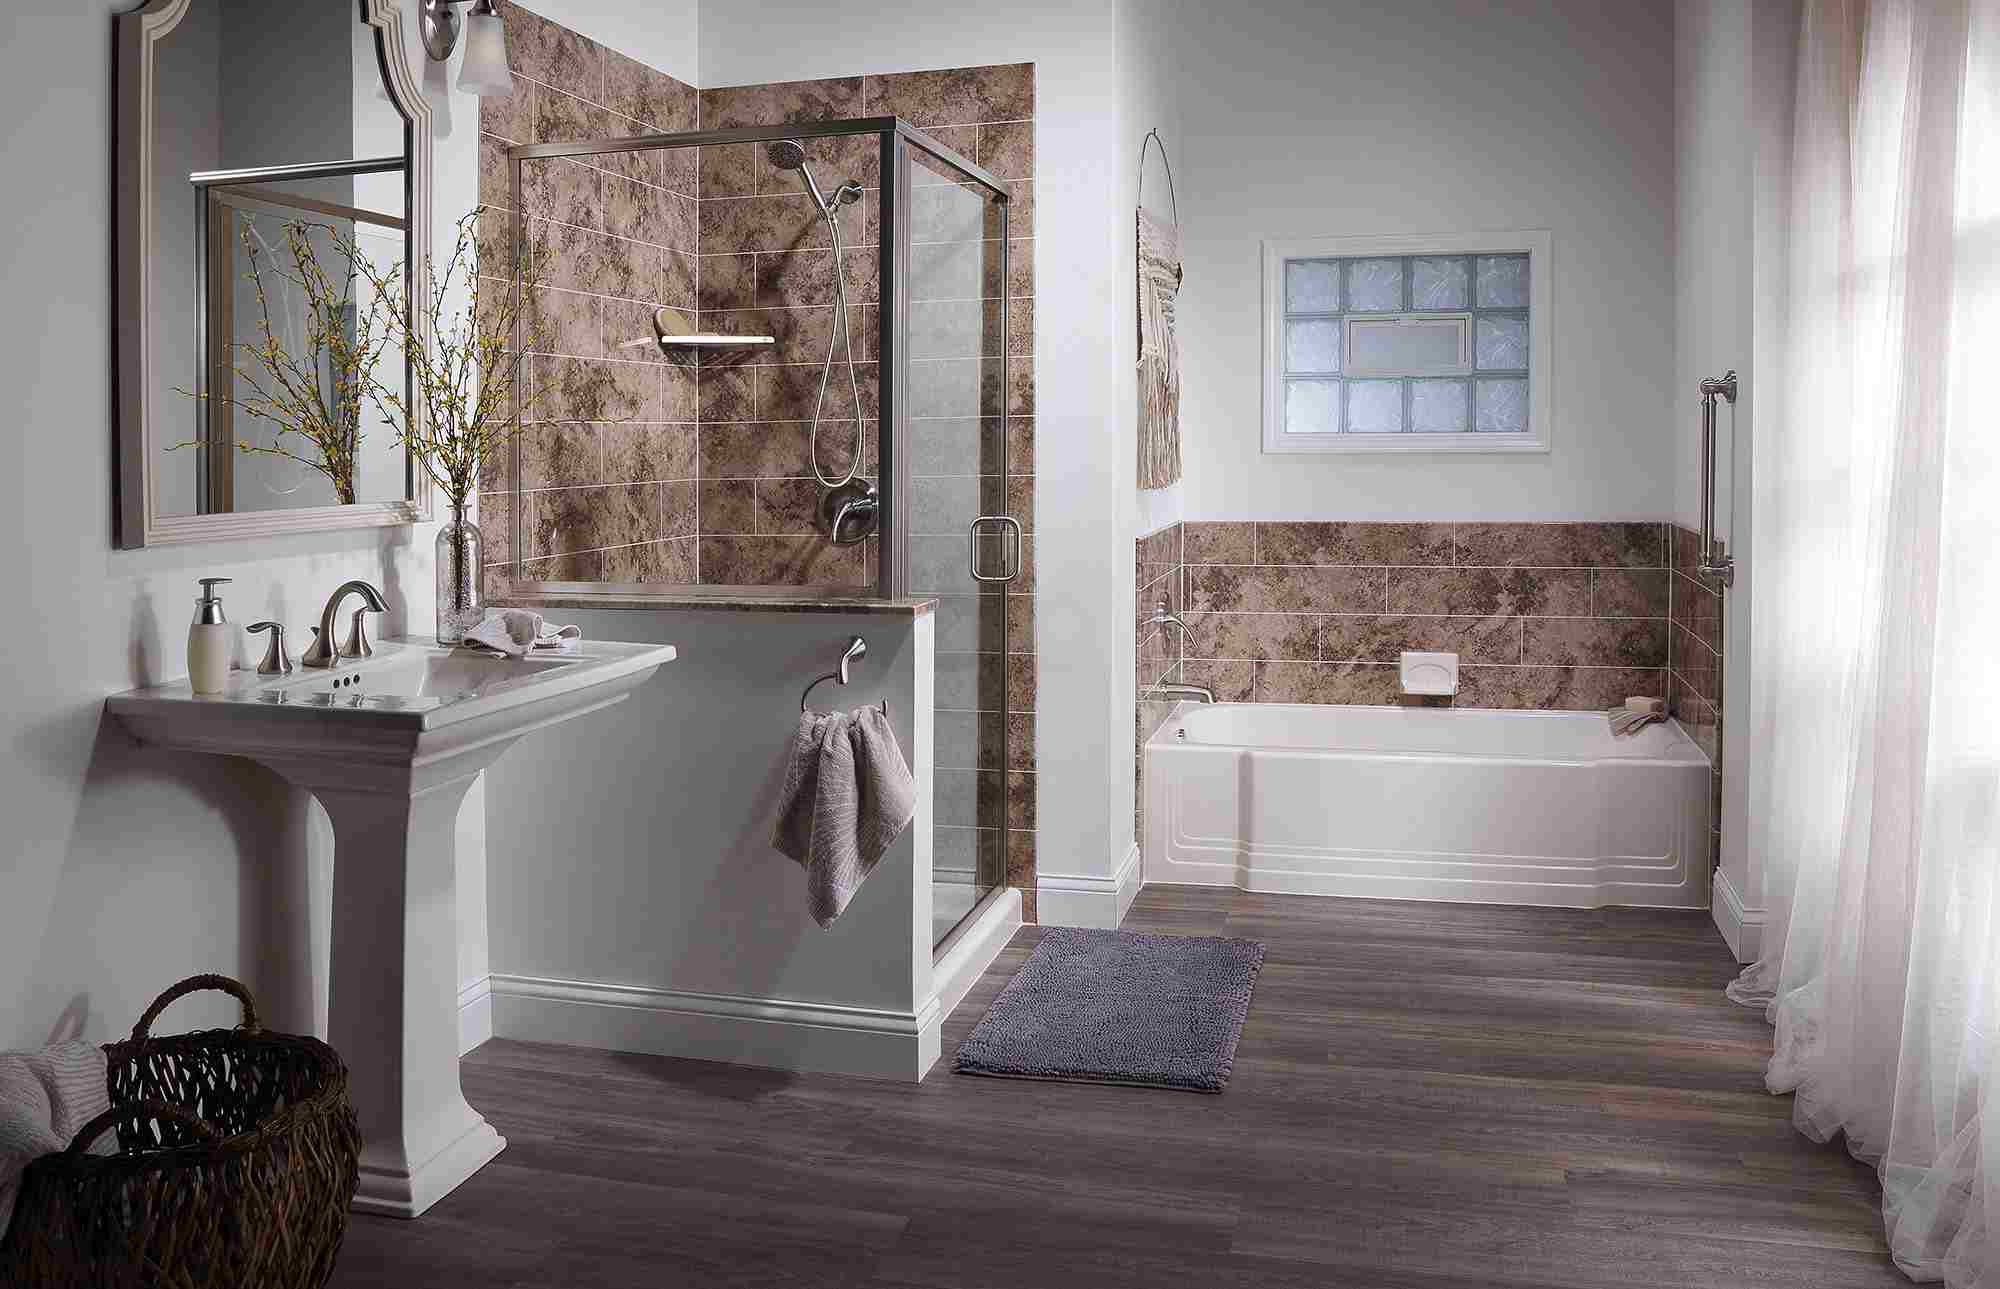 Kitchen and Bath Dimensions - Birmingham AL Bath & Shower Remodel